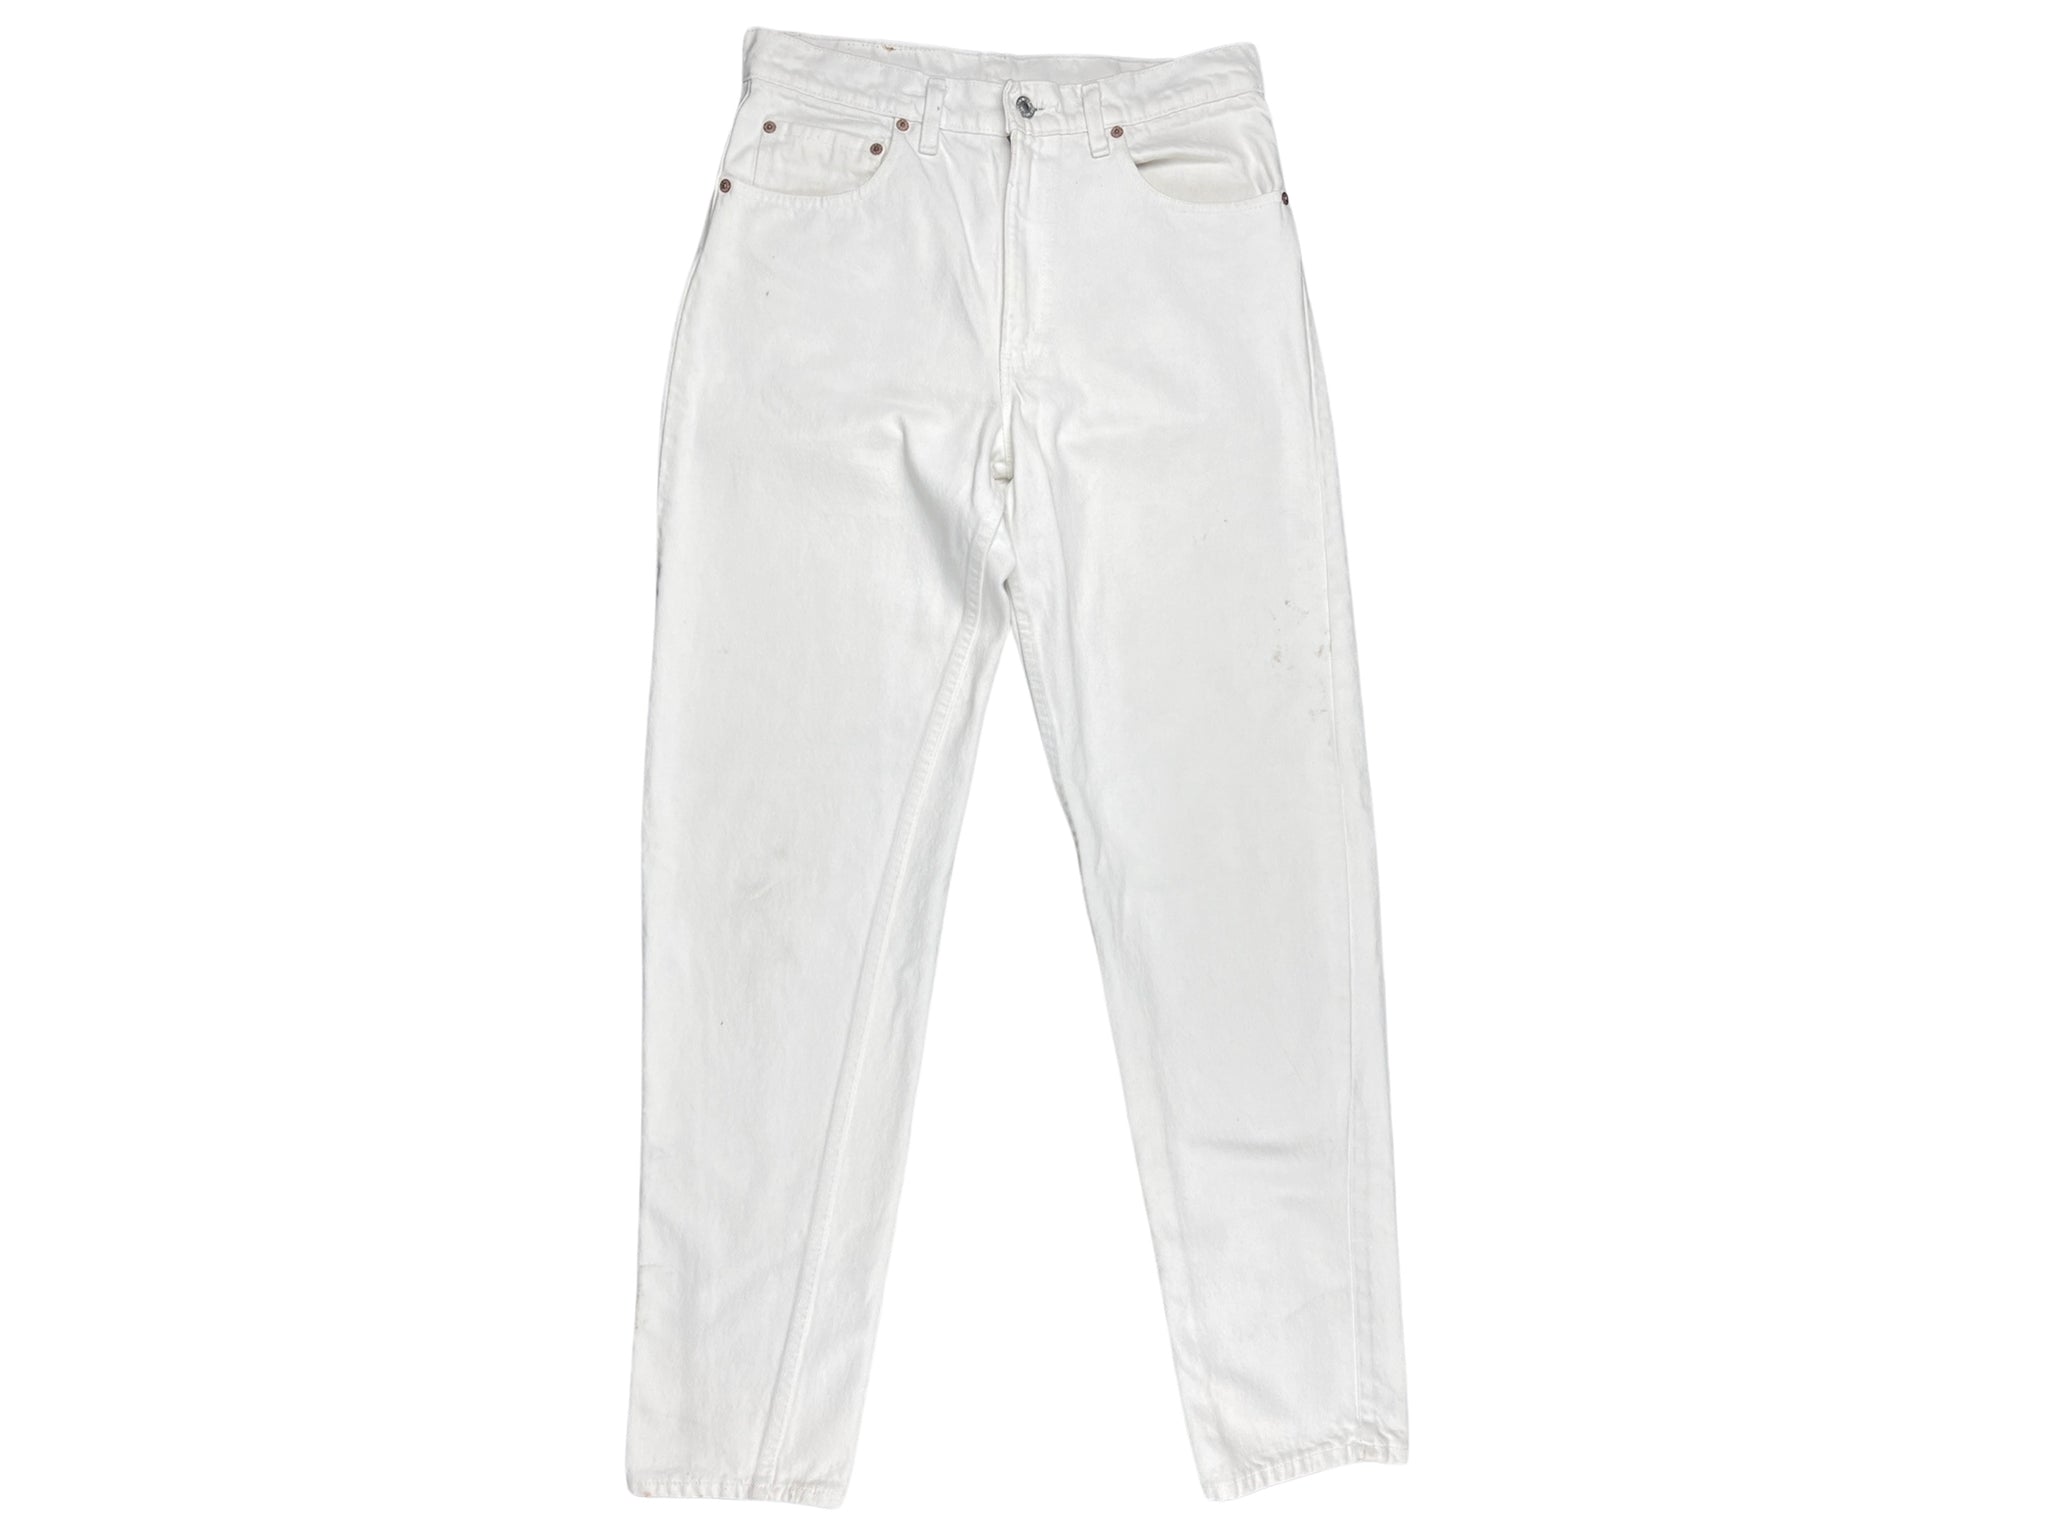 Levi's 550 White Jeans (31" x  33")